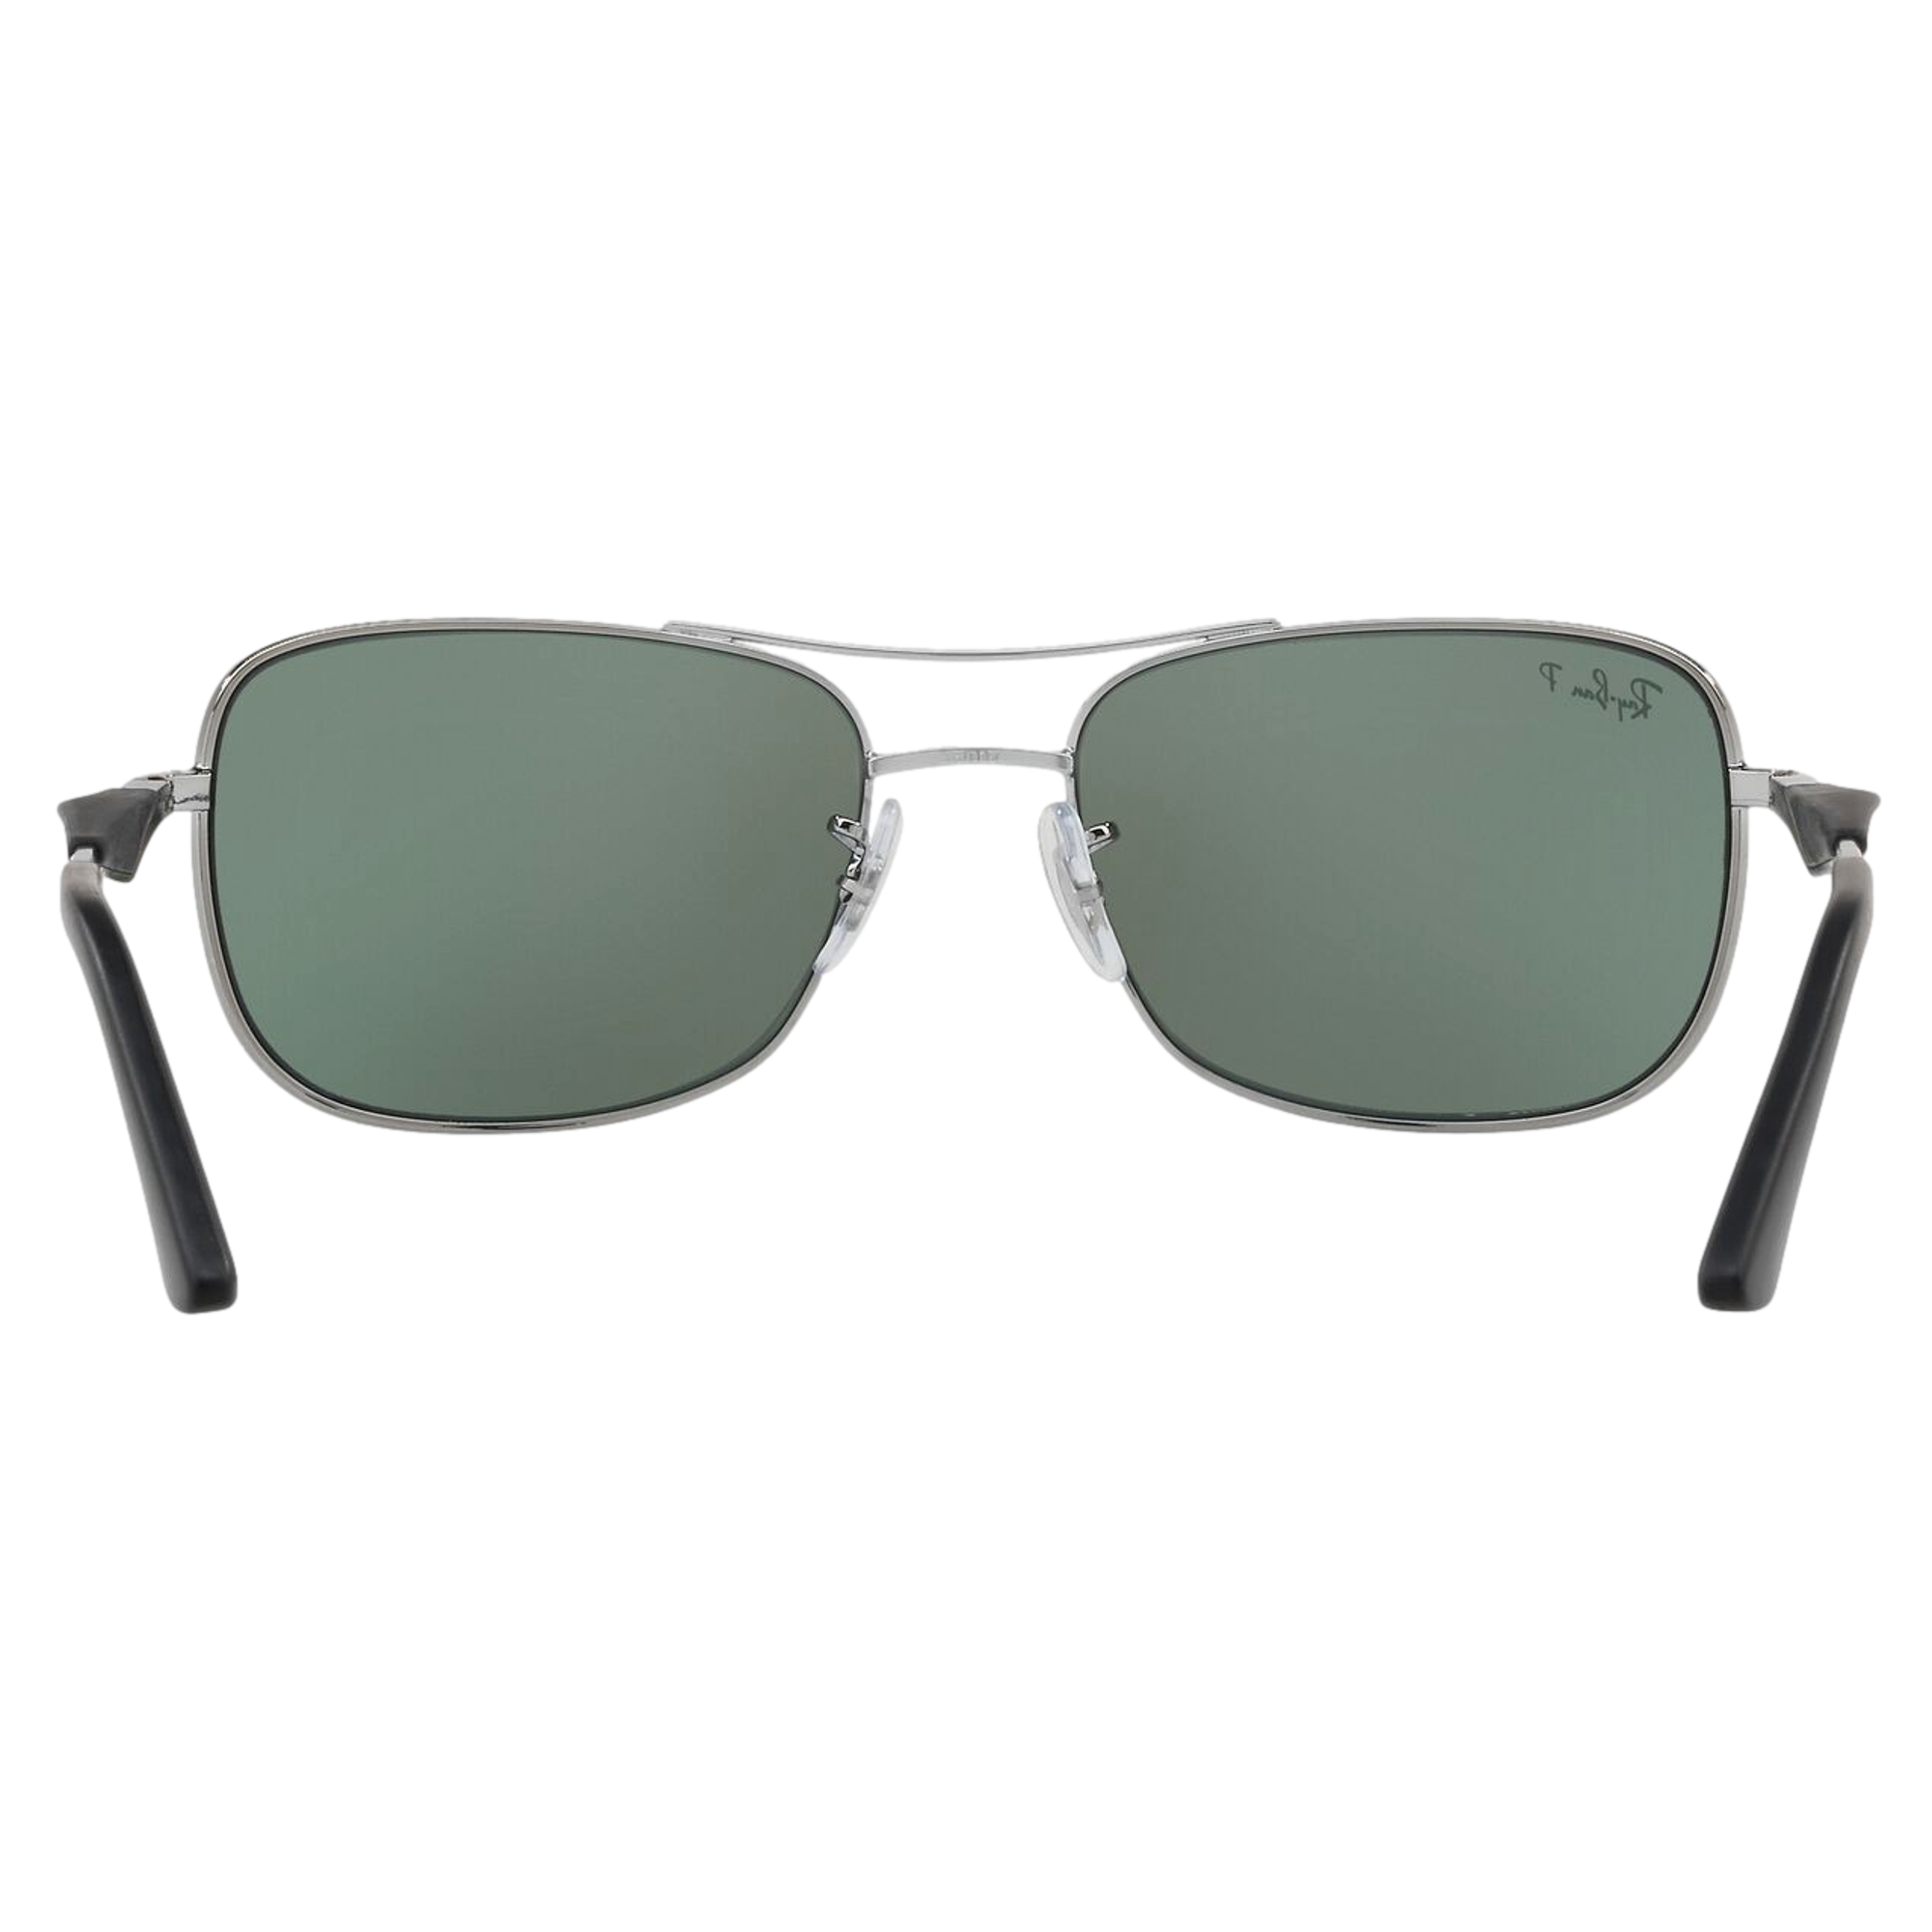 RB3515 Polarized Sunglasses